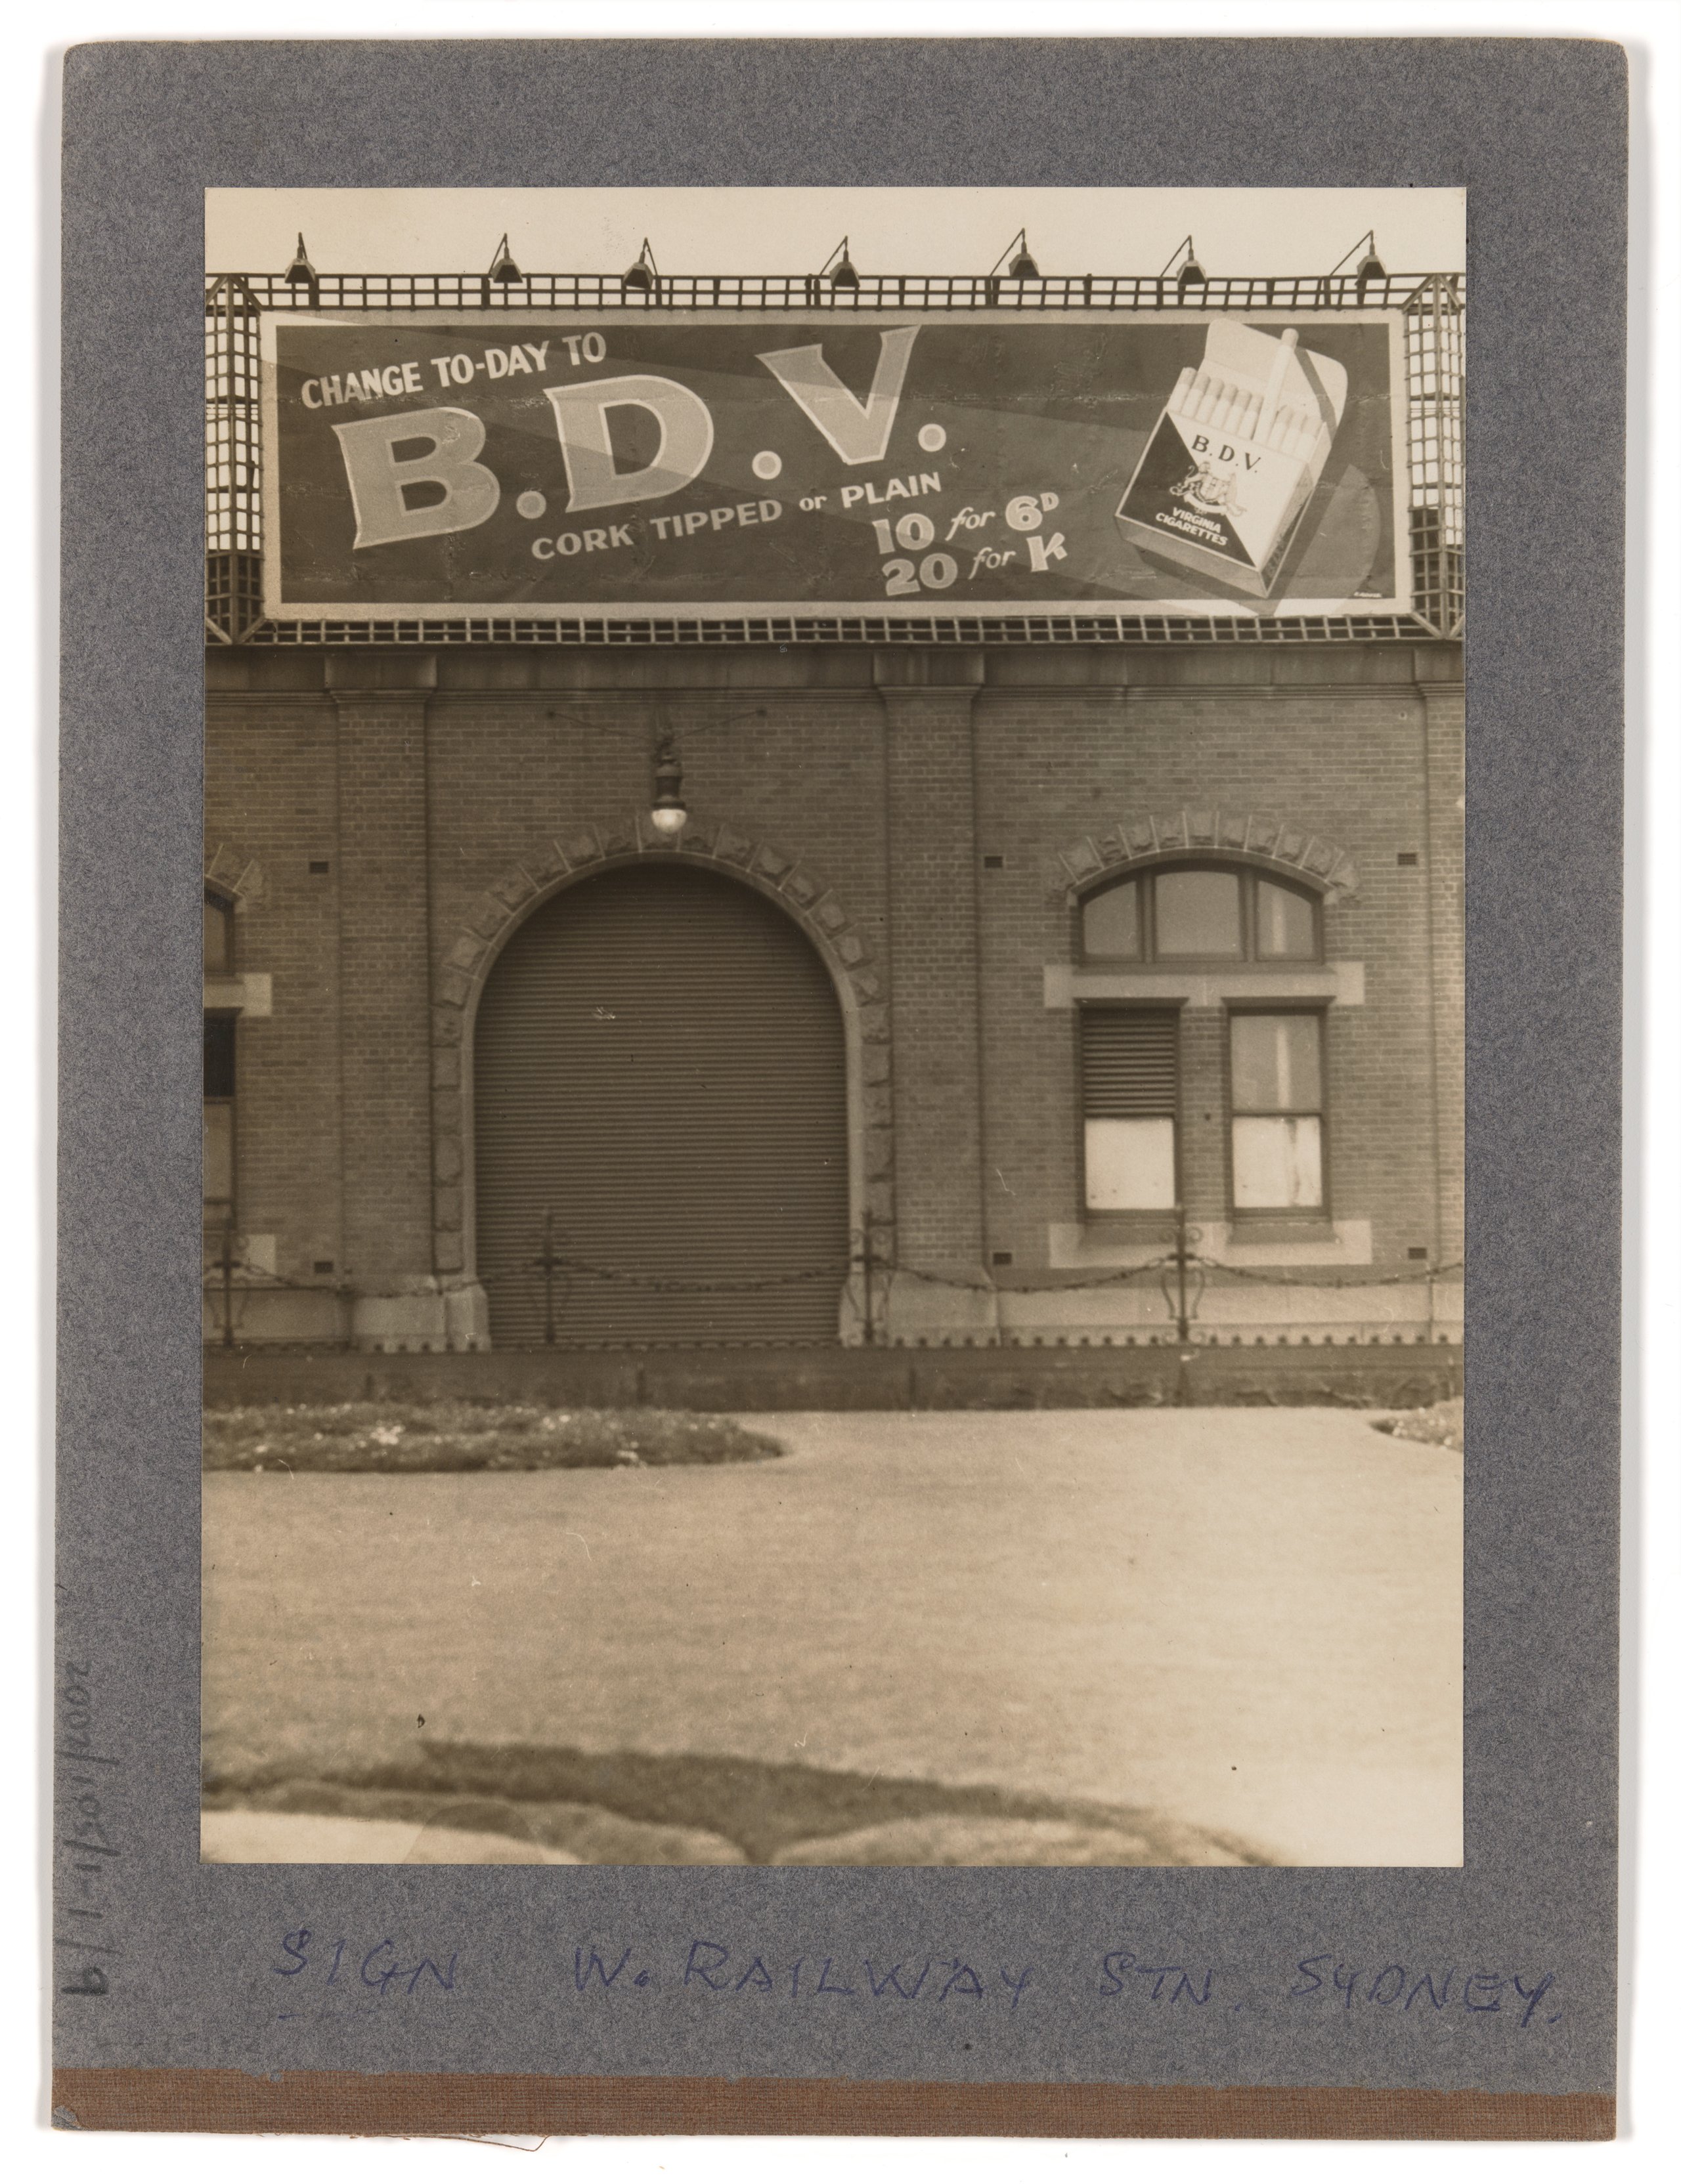 Photograph of advertising billboard for B.D.V. Virginia Cigarettes